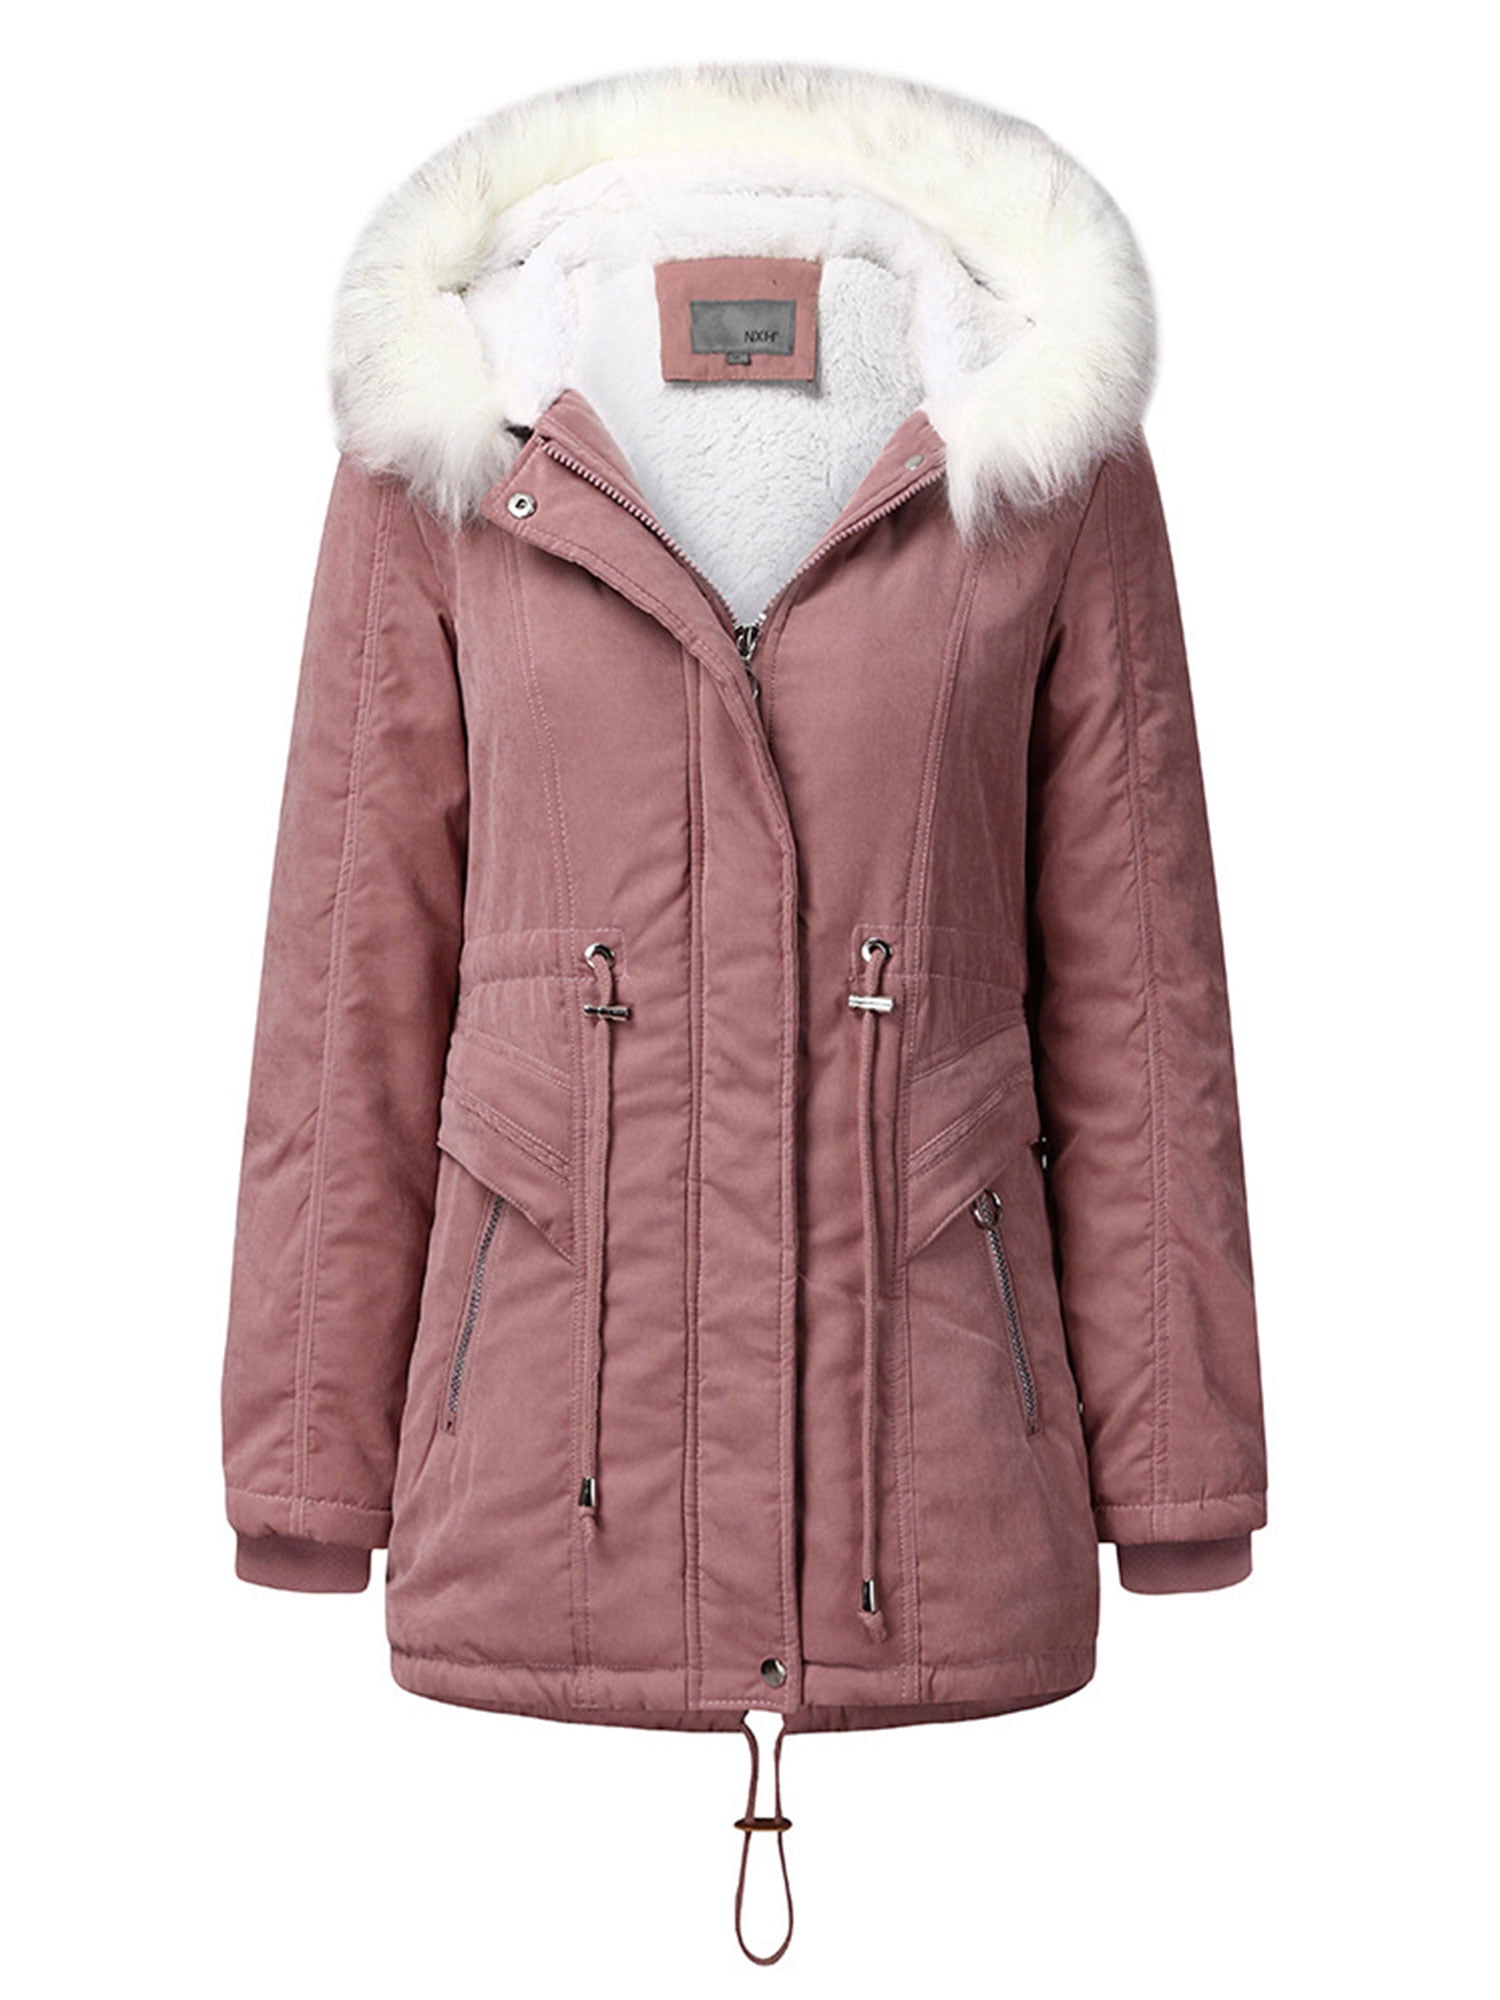 COUTUDI Winter Outwear Lightweight Mid-Length Hooded Coat for Women